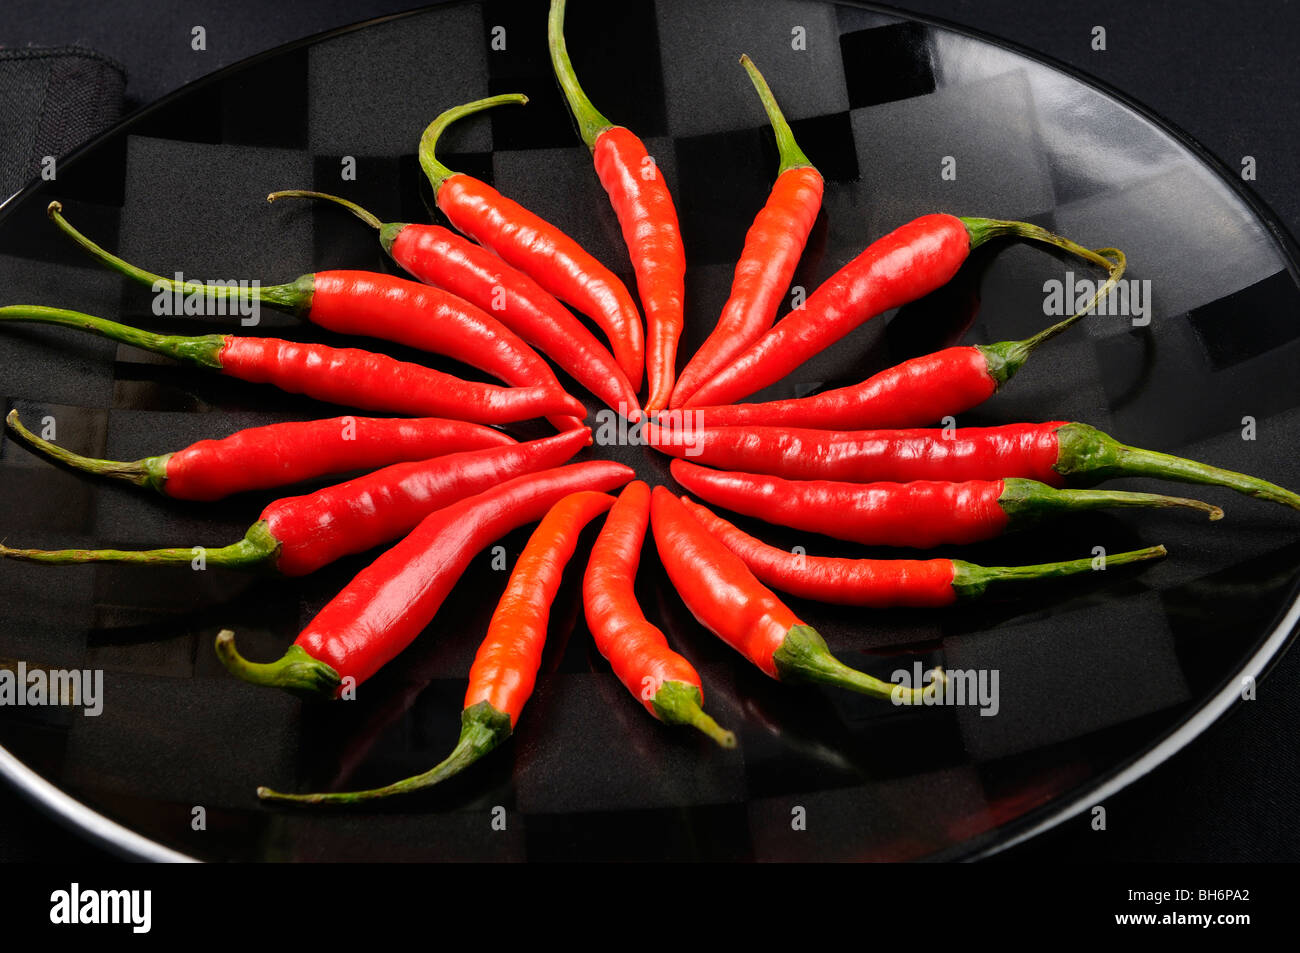 Cerca de un anillo de red hot chili peppers sobre una placa negra Foto de stock